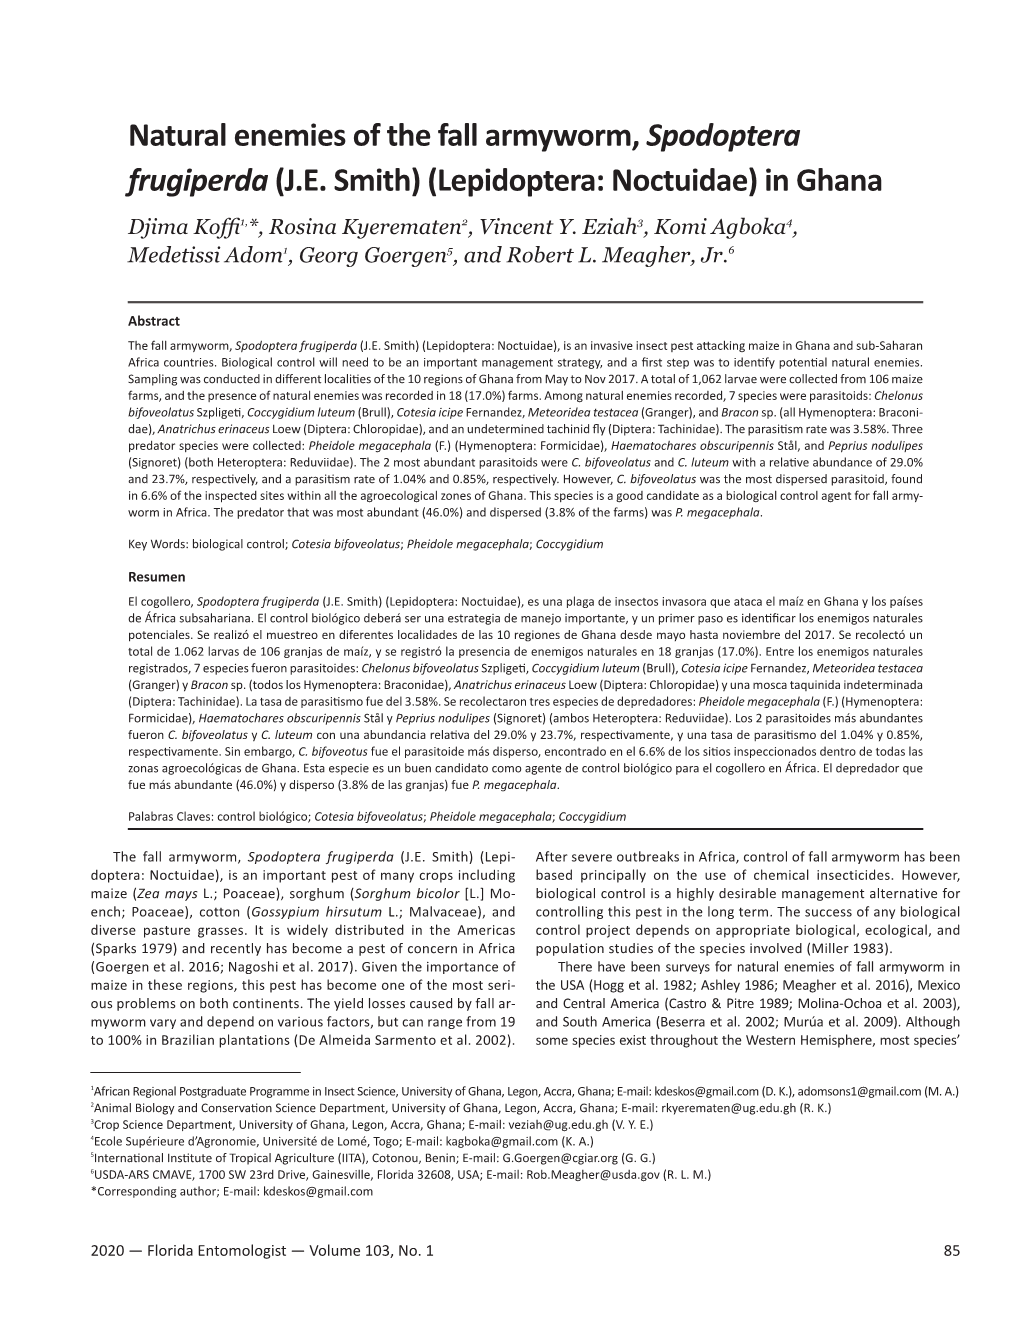 Natural Enemies of the Fall Armyworm, Spodoptera Frugiperda(J.E. Smith) (Lepidoptera: Noctuidae) in Ghana